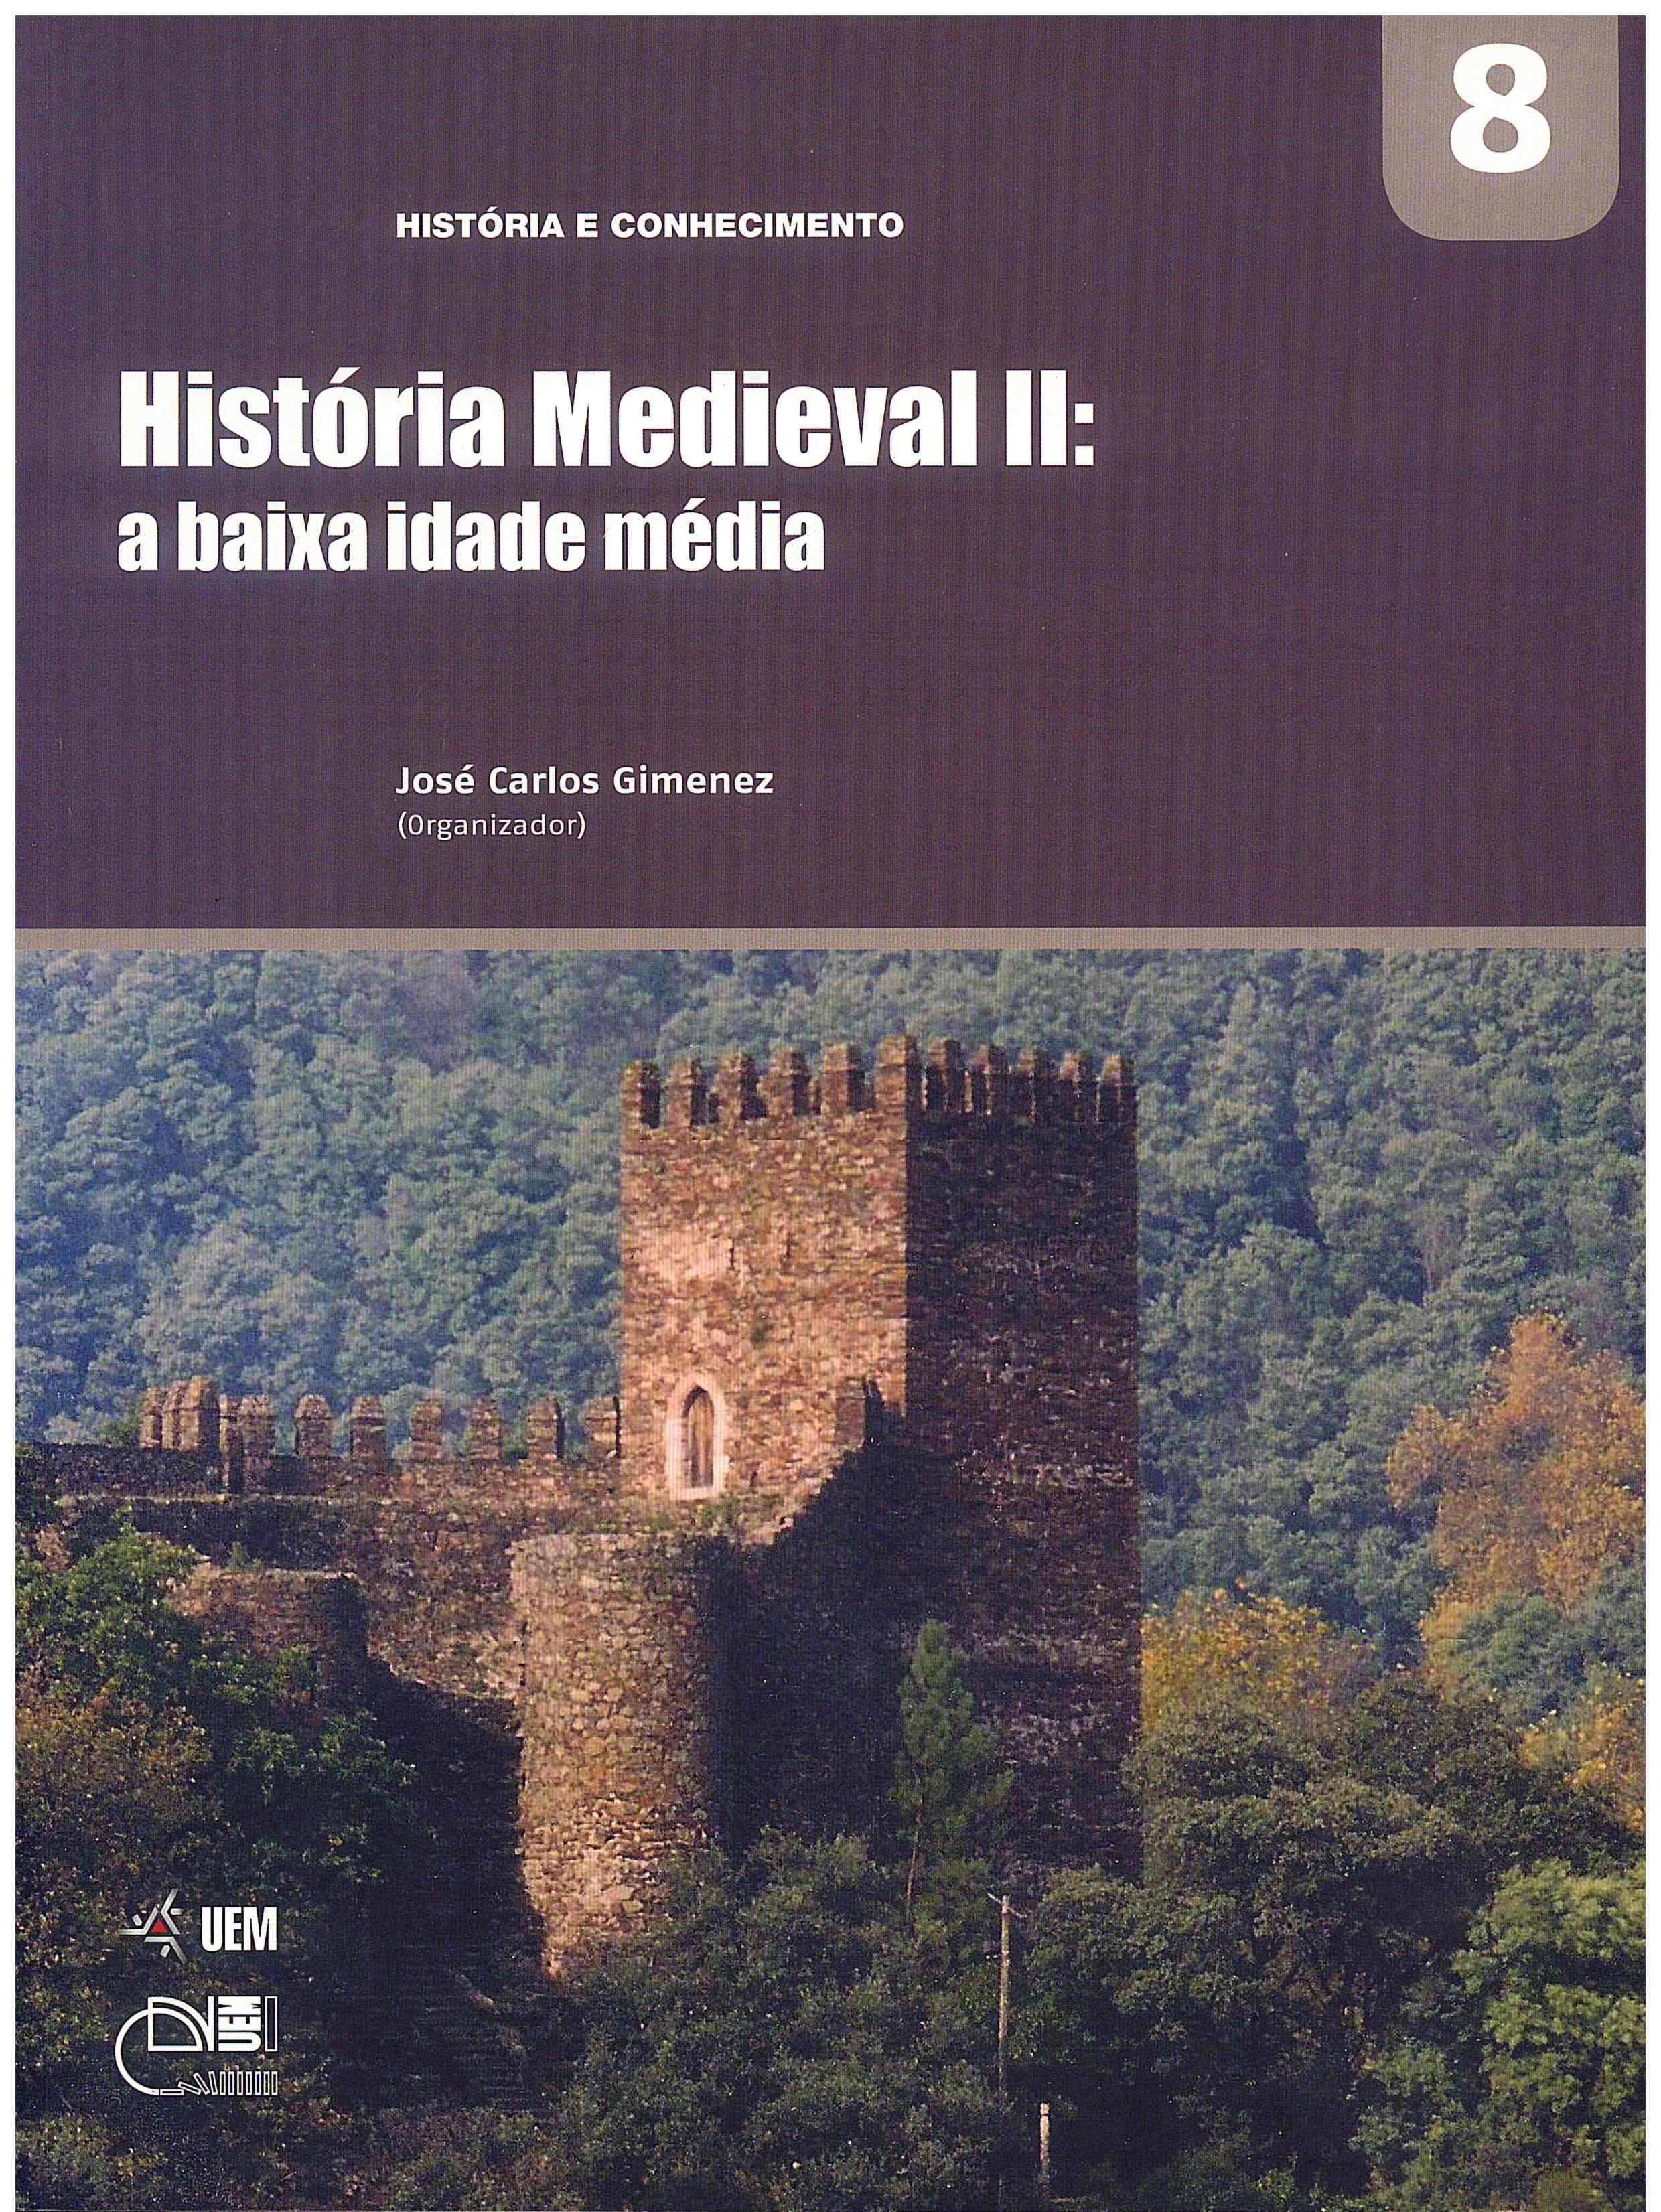 GIMENEZ, J. C. (Org.). História Medieval II: a baixa idade média